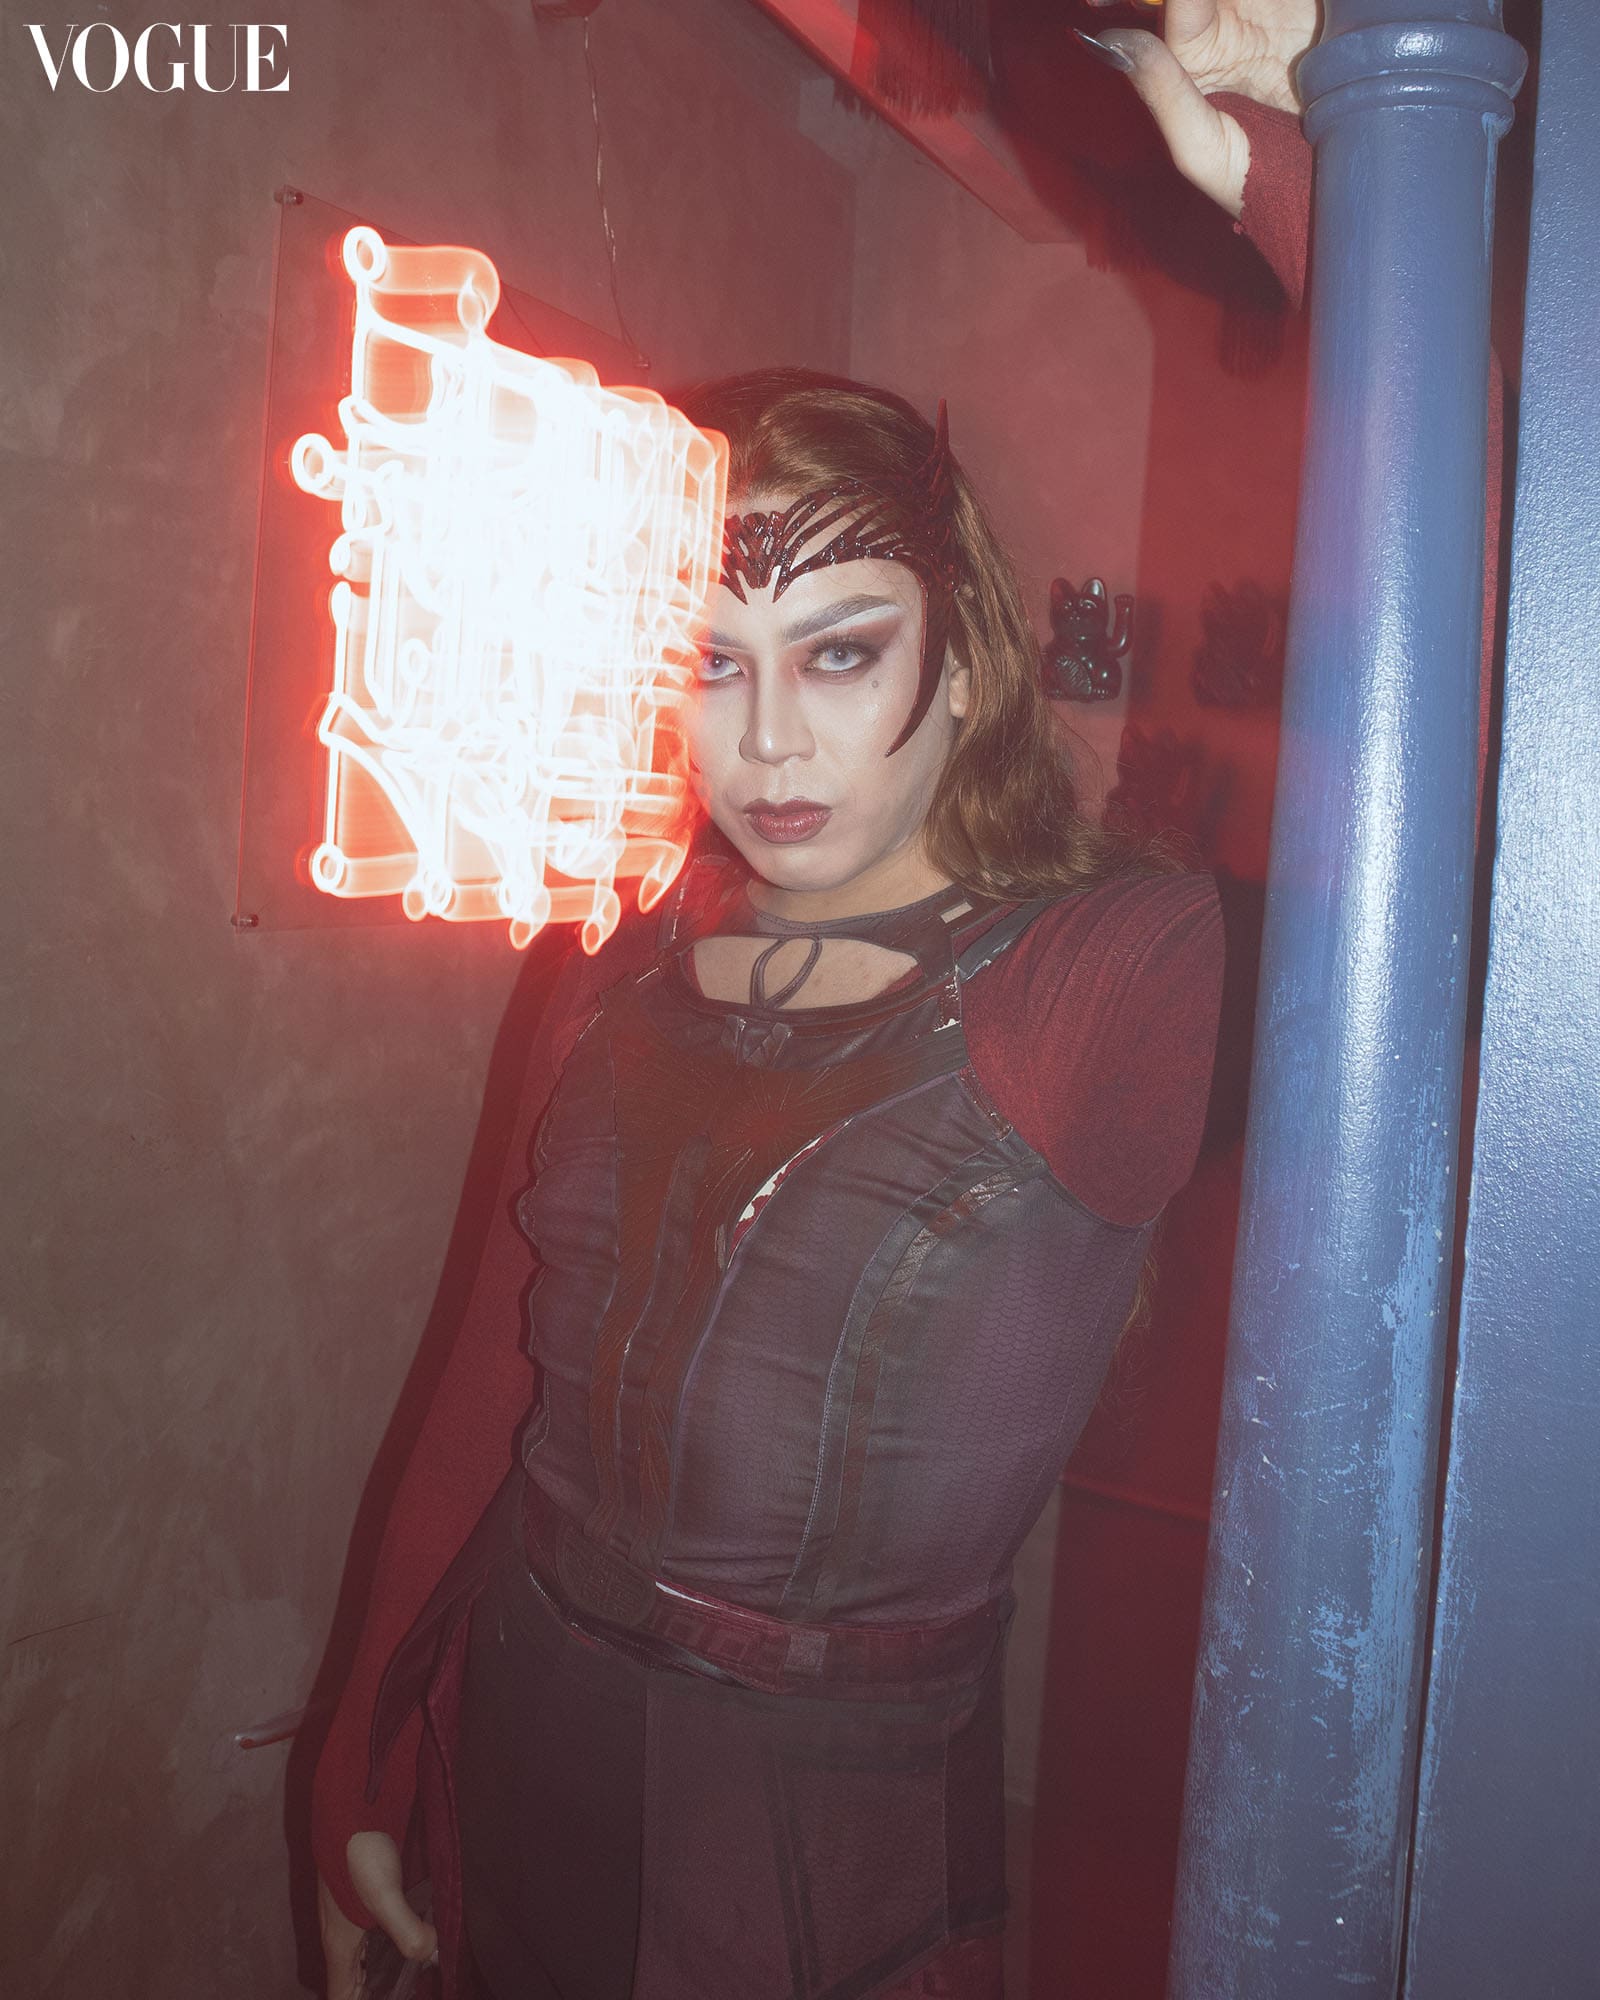 Zajarel Morales as Wanda Maximoff at Apotheka’s Church Halloween event.